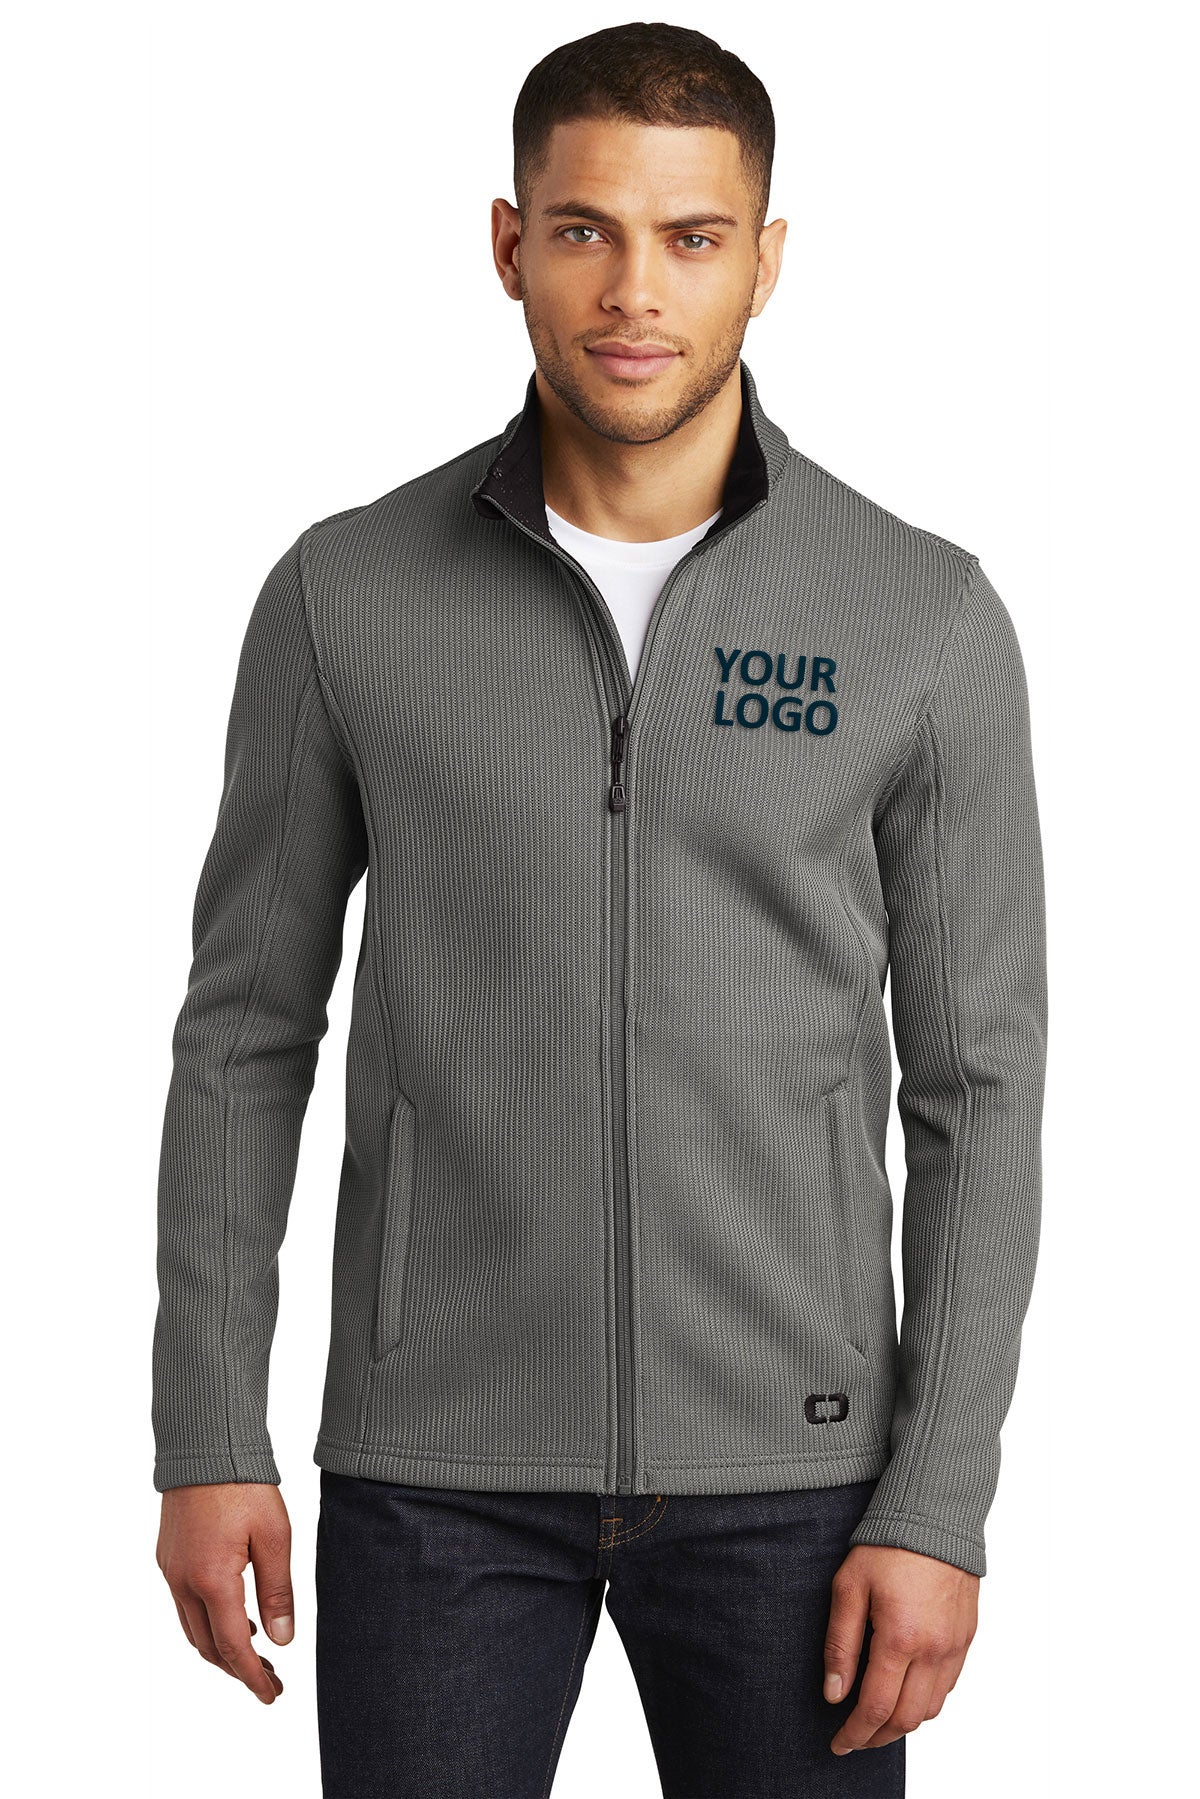 OGIO Gear Grey OG727 promotional jackets company logo